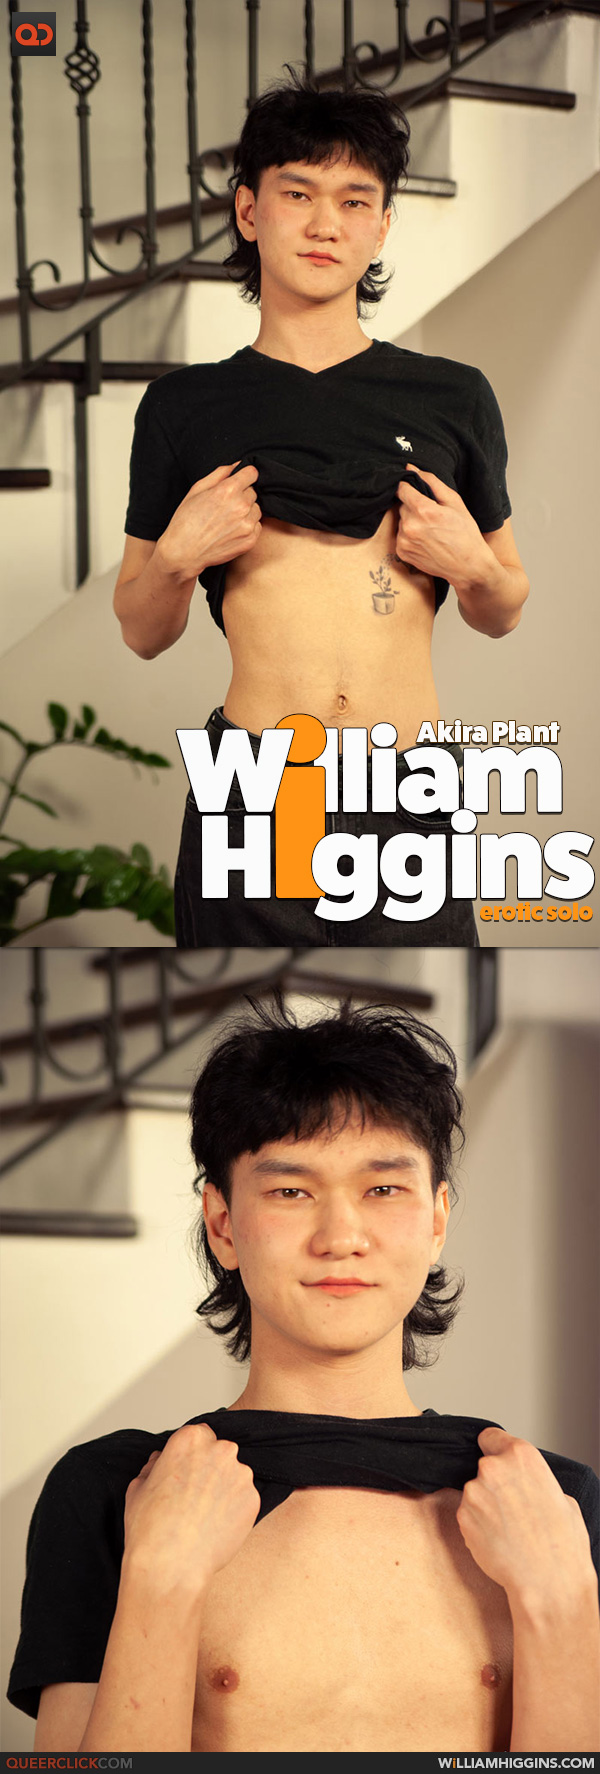 William Higgins: Akira Plant